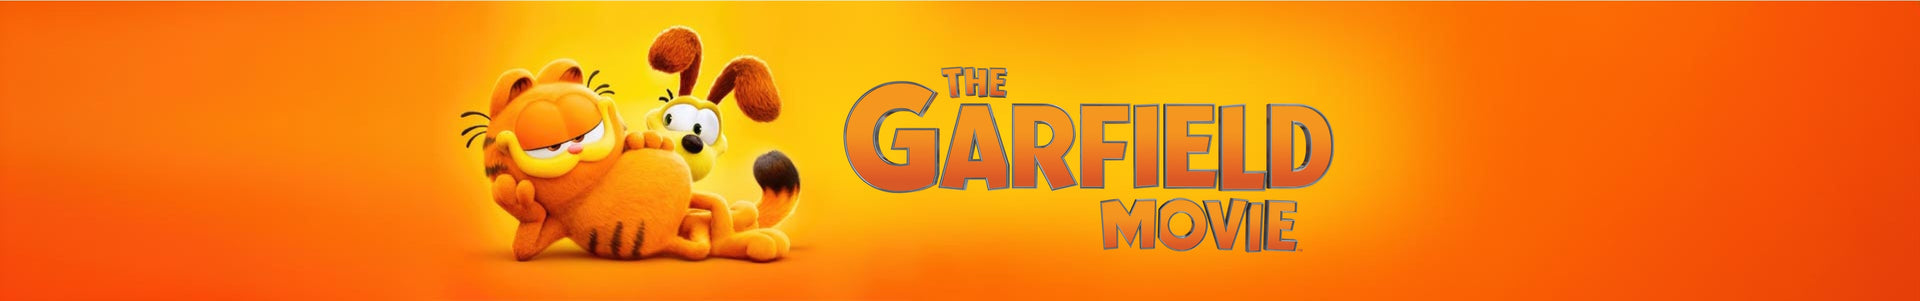 the garfield movie-image